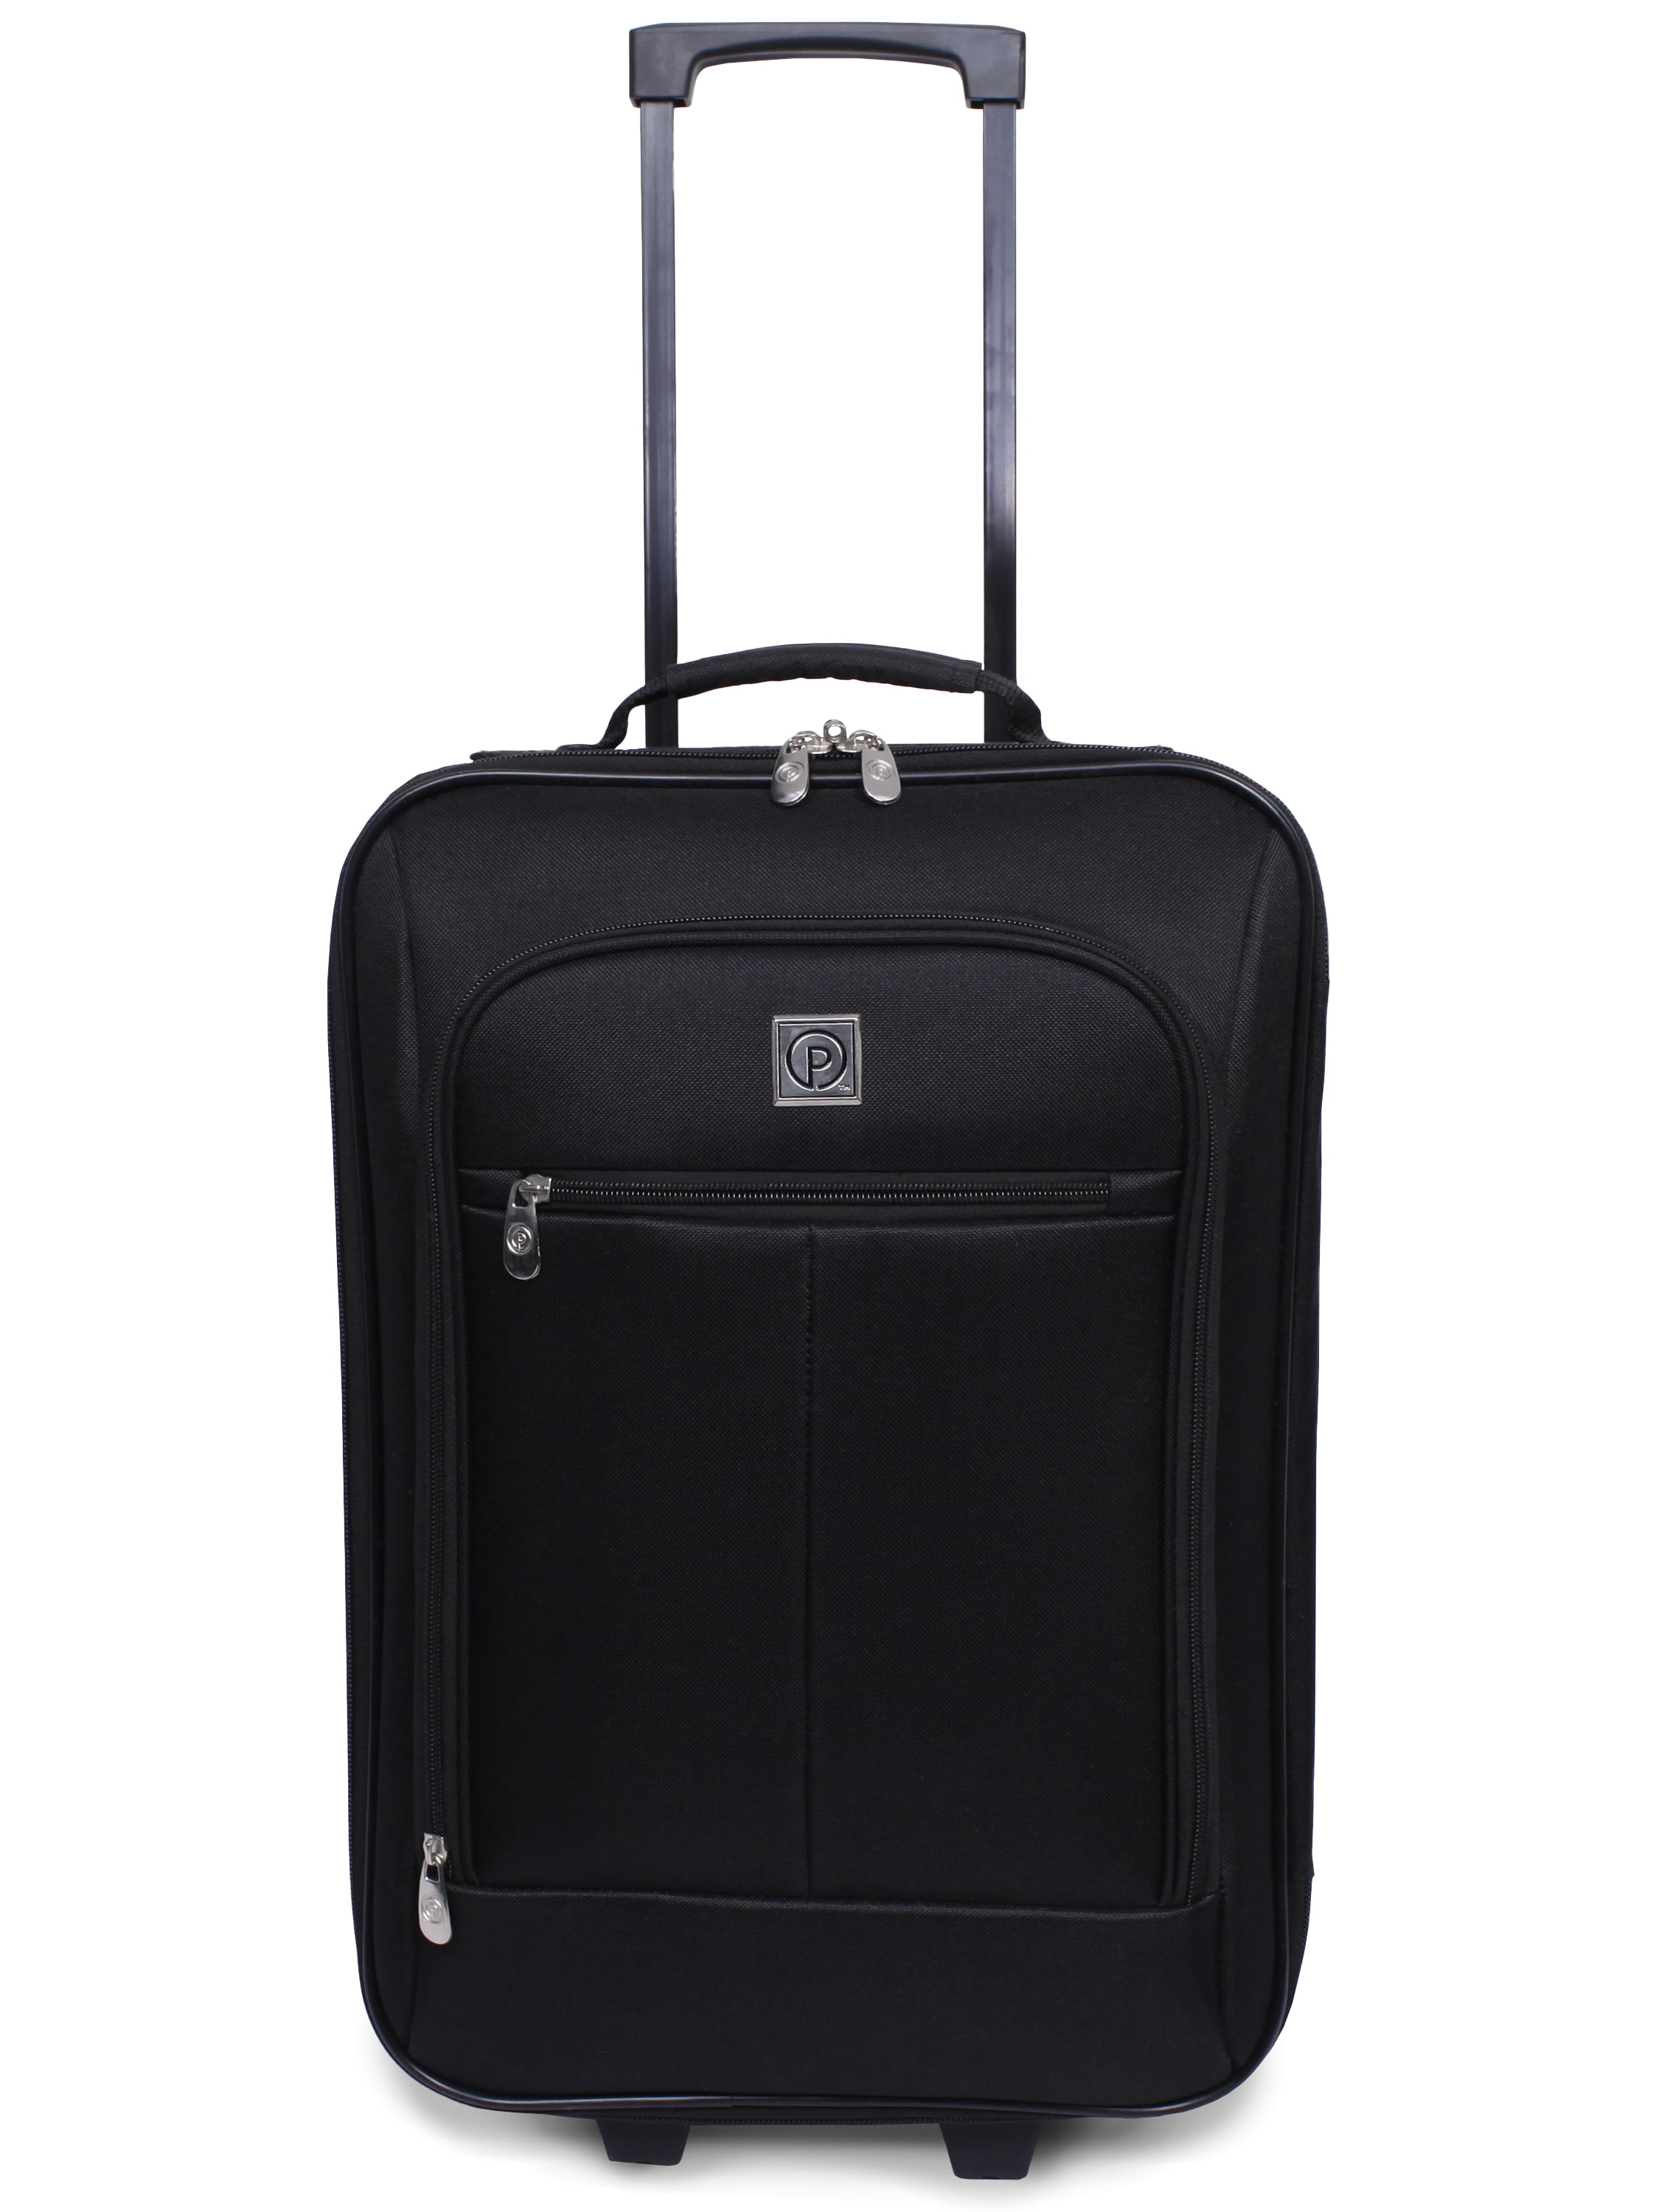 Protege Pilot Case Carry-On Suitcase, 18 (Walmart Exclusive) - 0